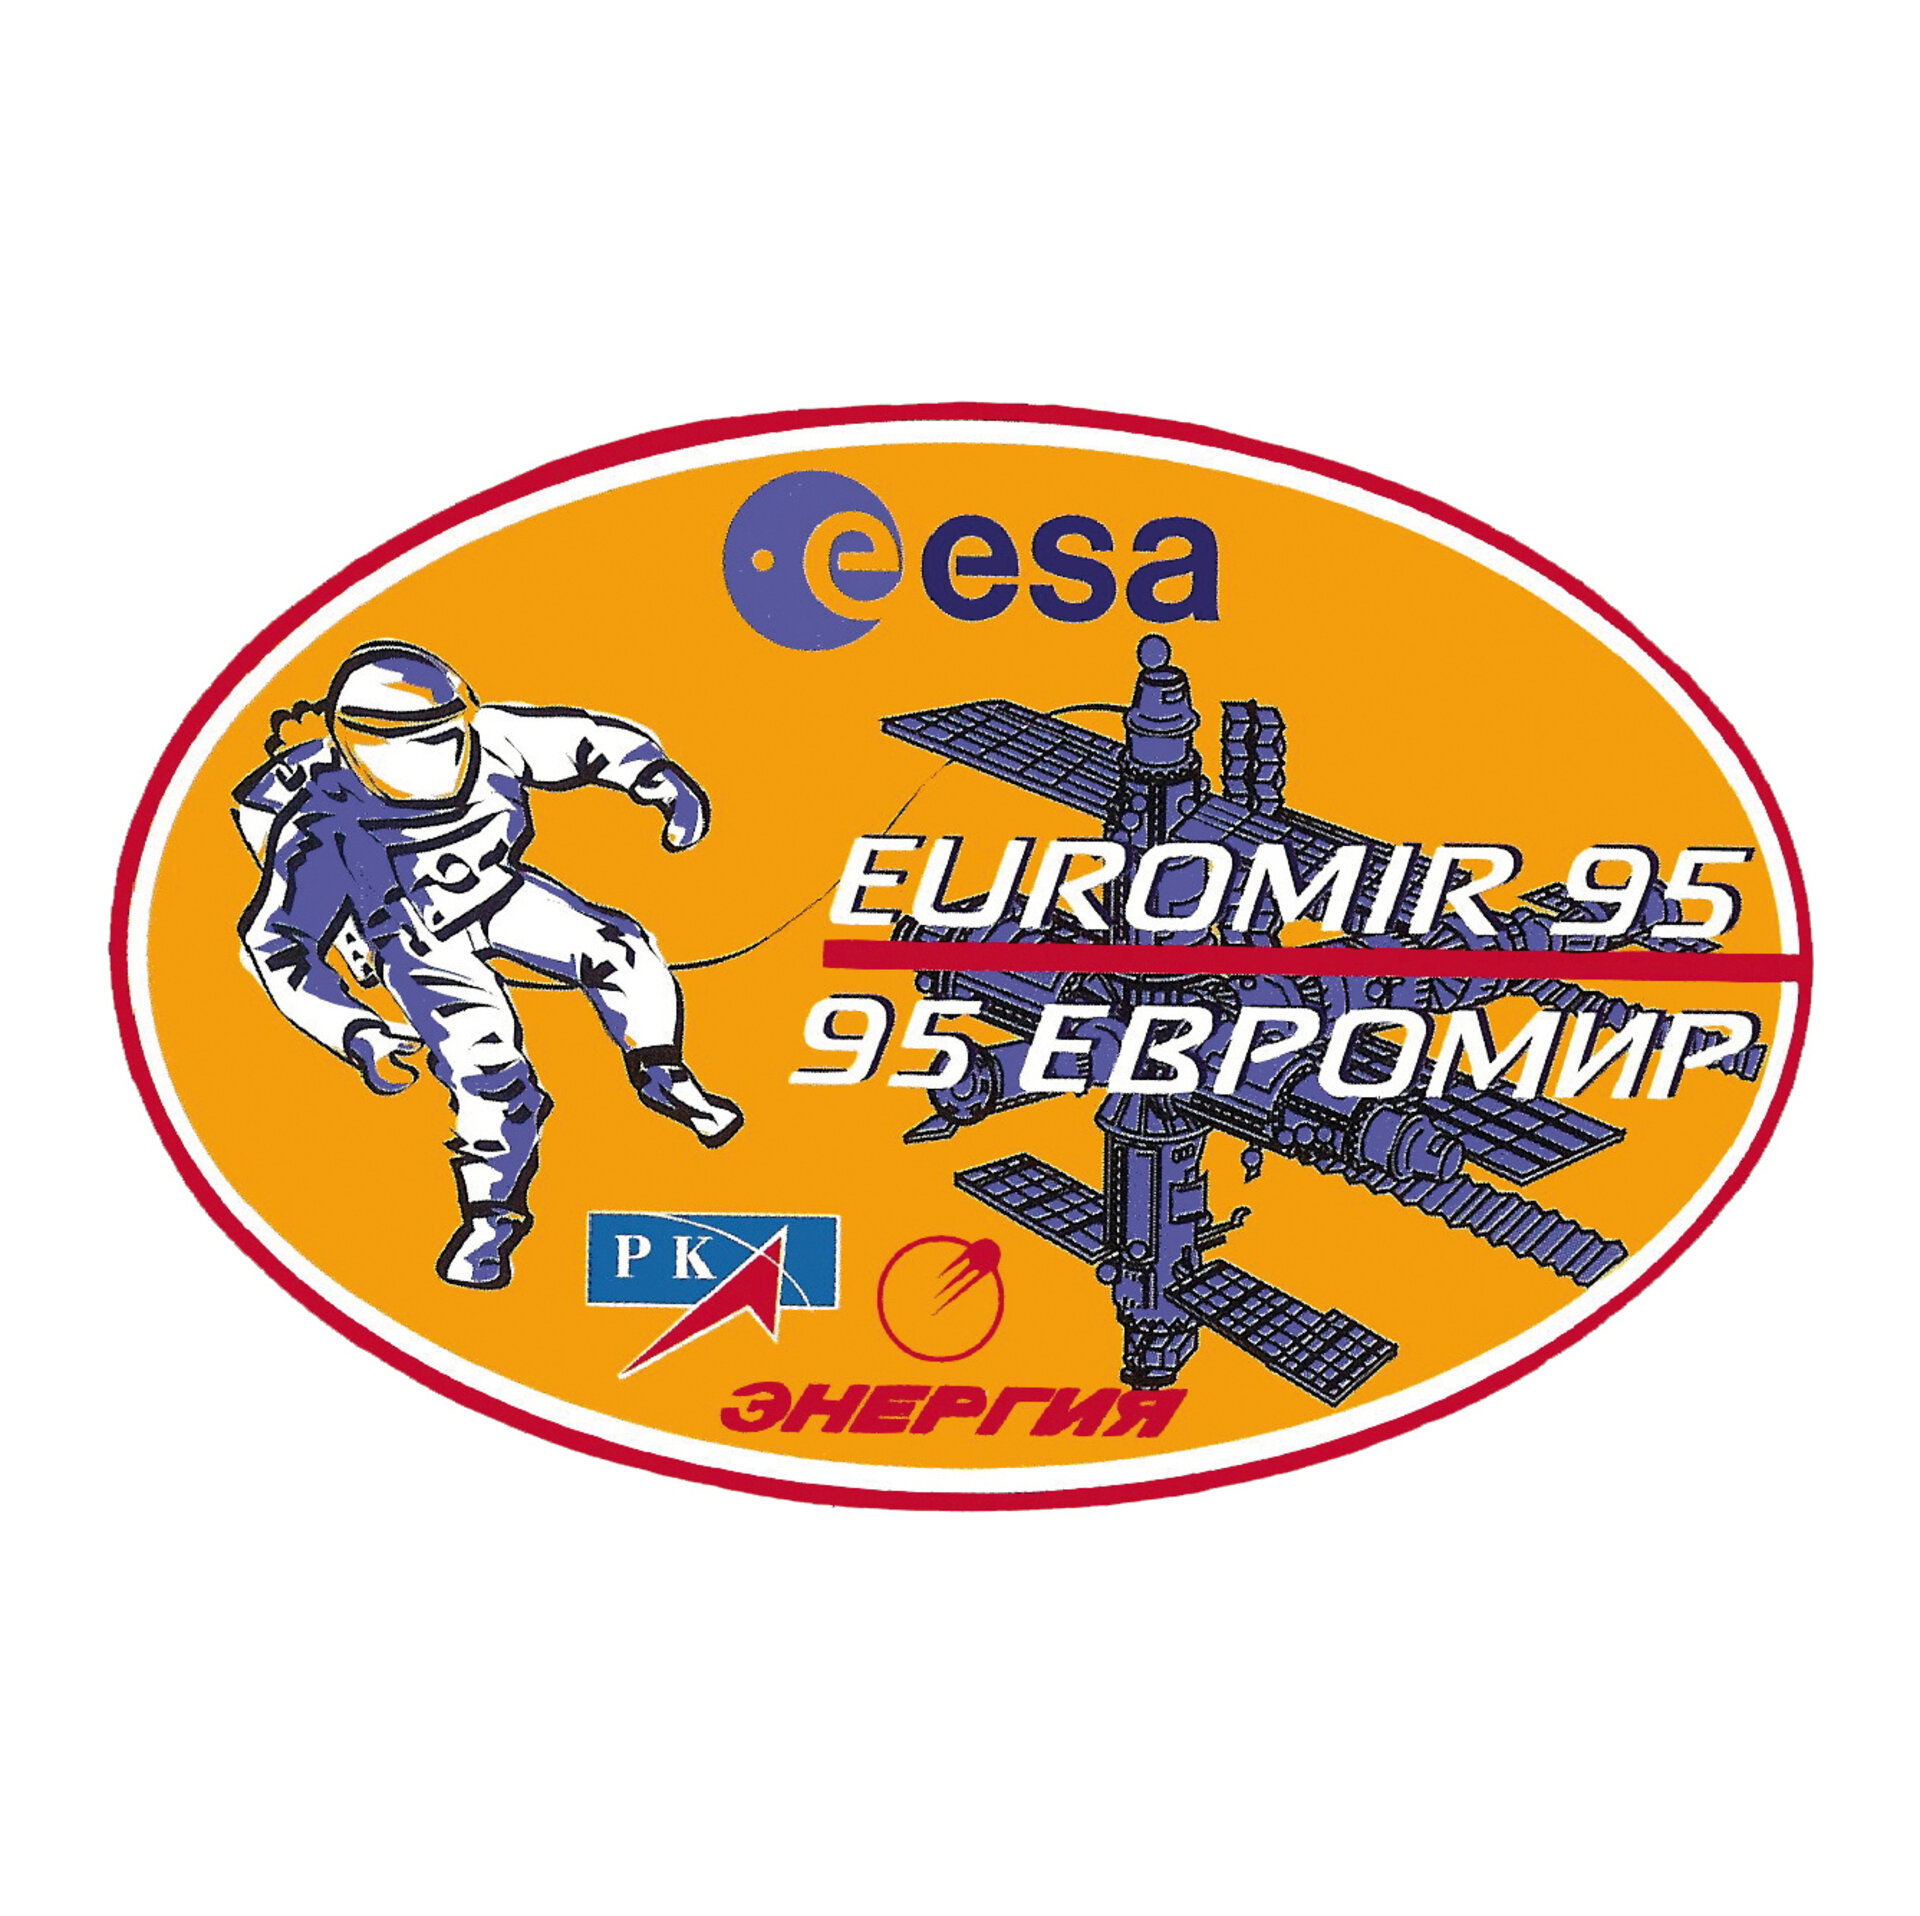 Soyuz TM-22 Euromir 95 mission patch, 1995